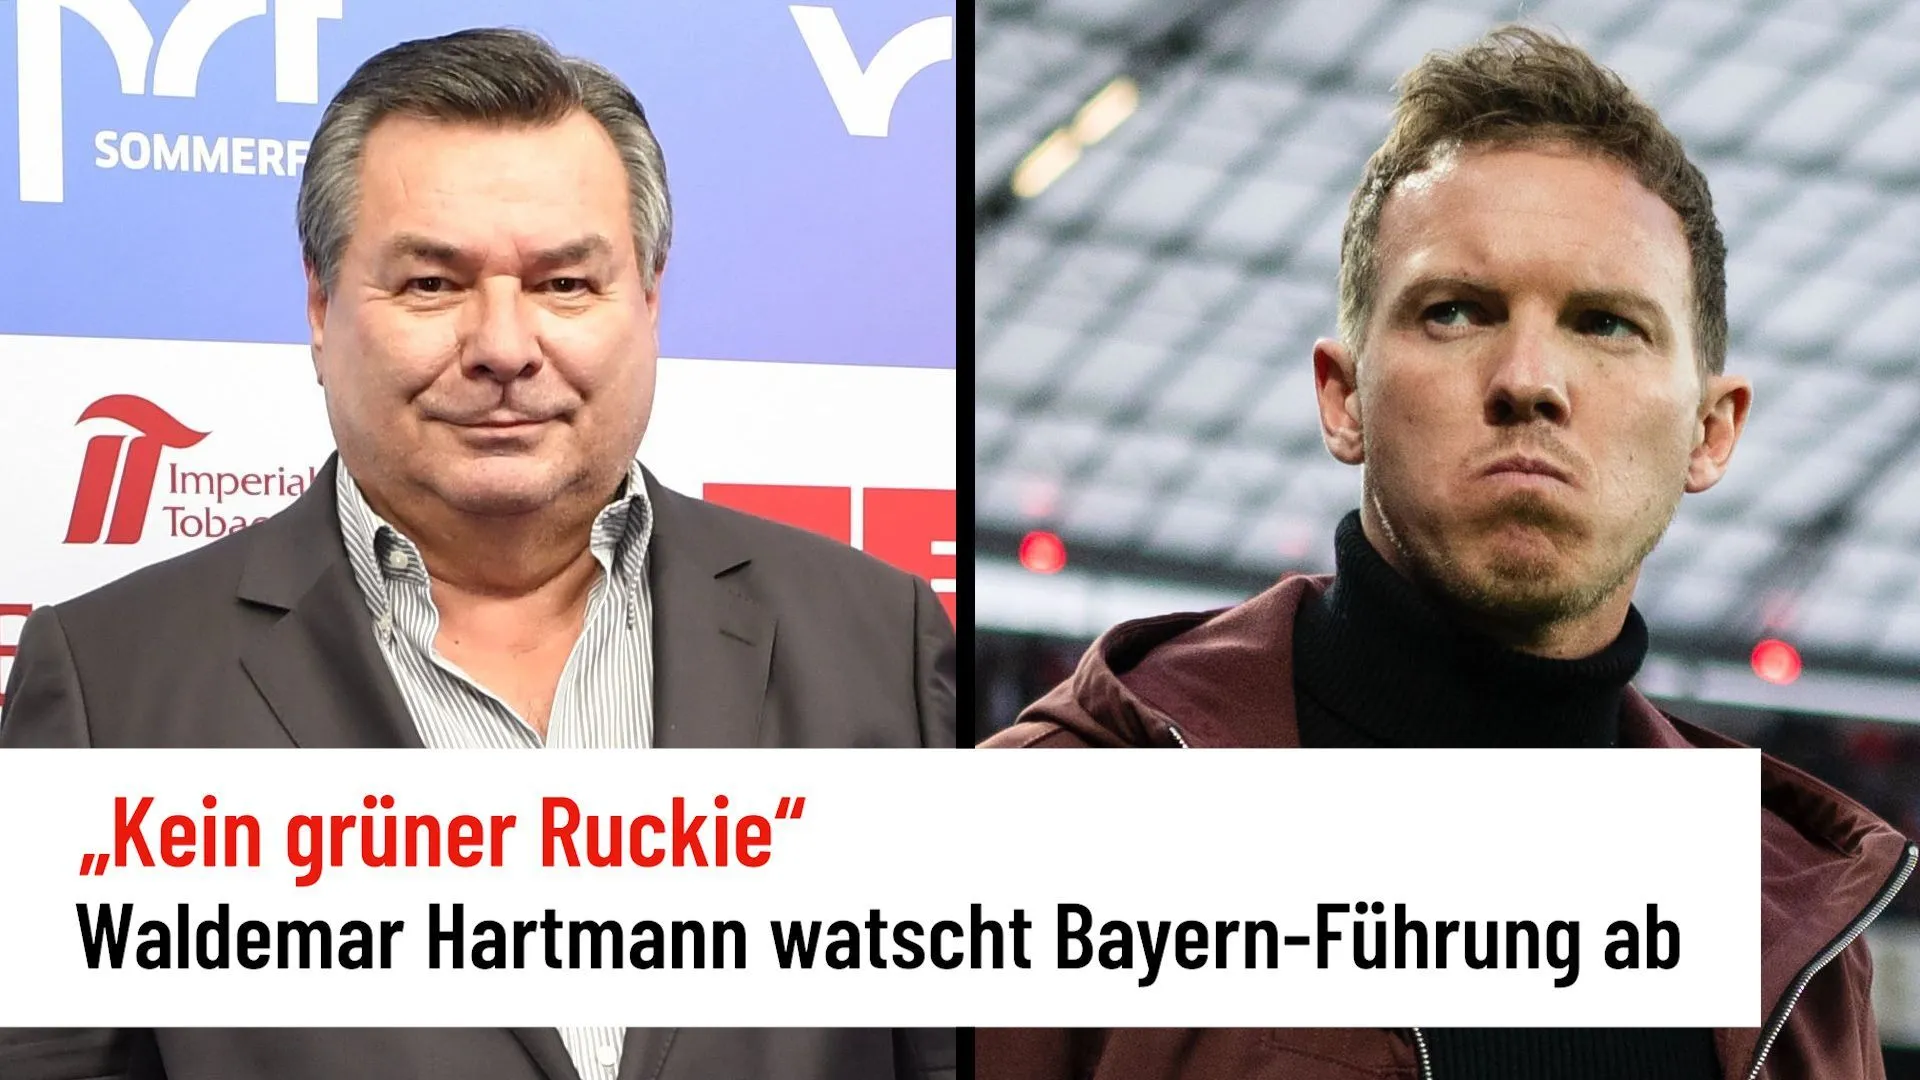 Waldemar Hartmann s'en prend à la direction du FC Bayern Munich - Nagelsmann 